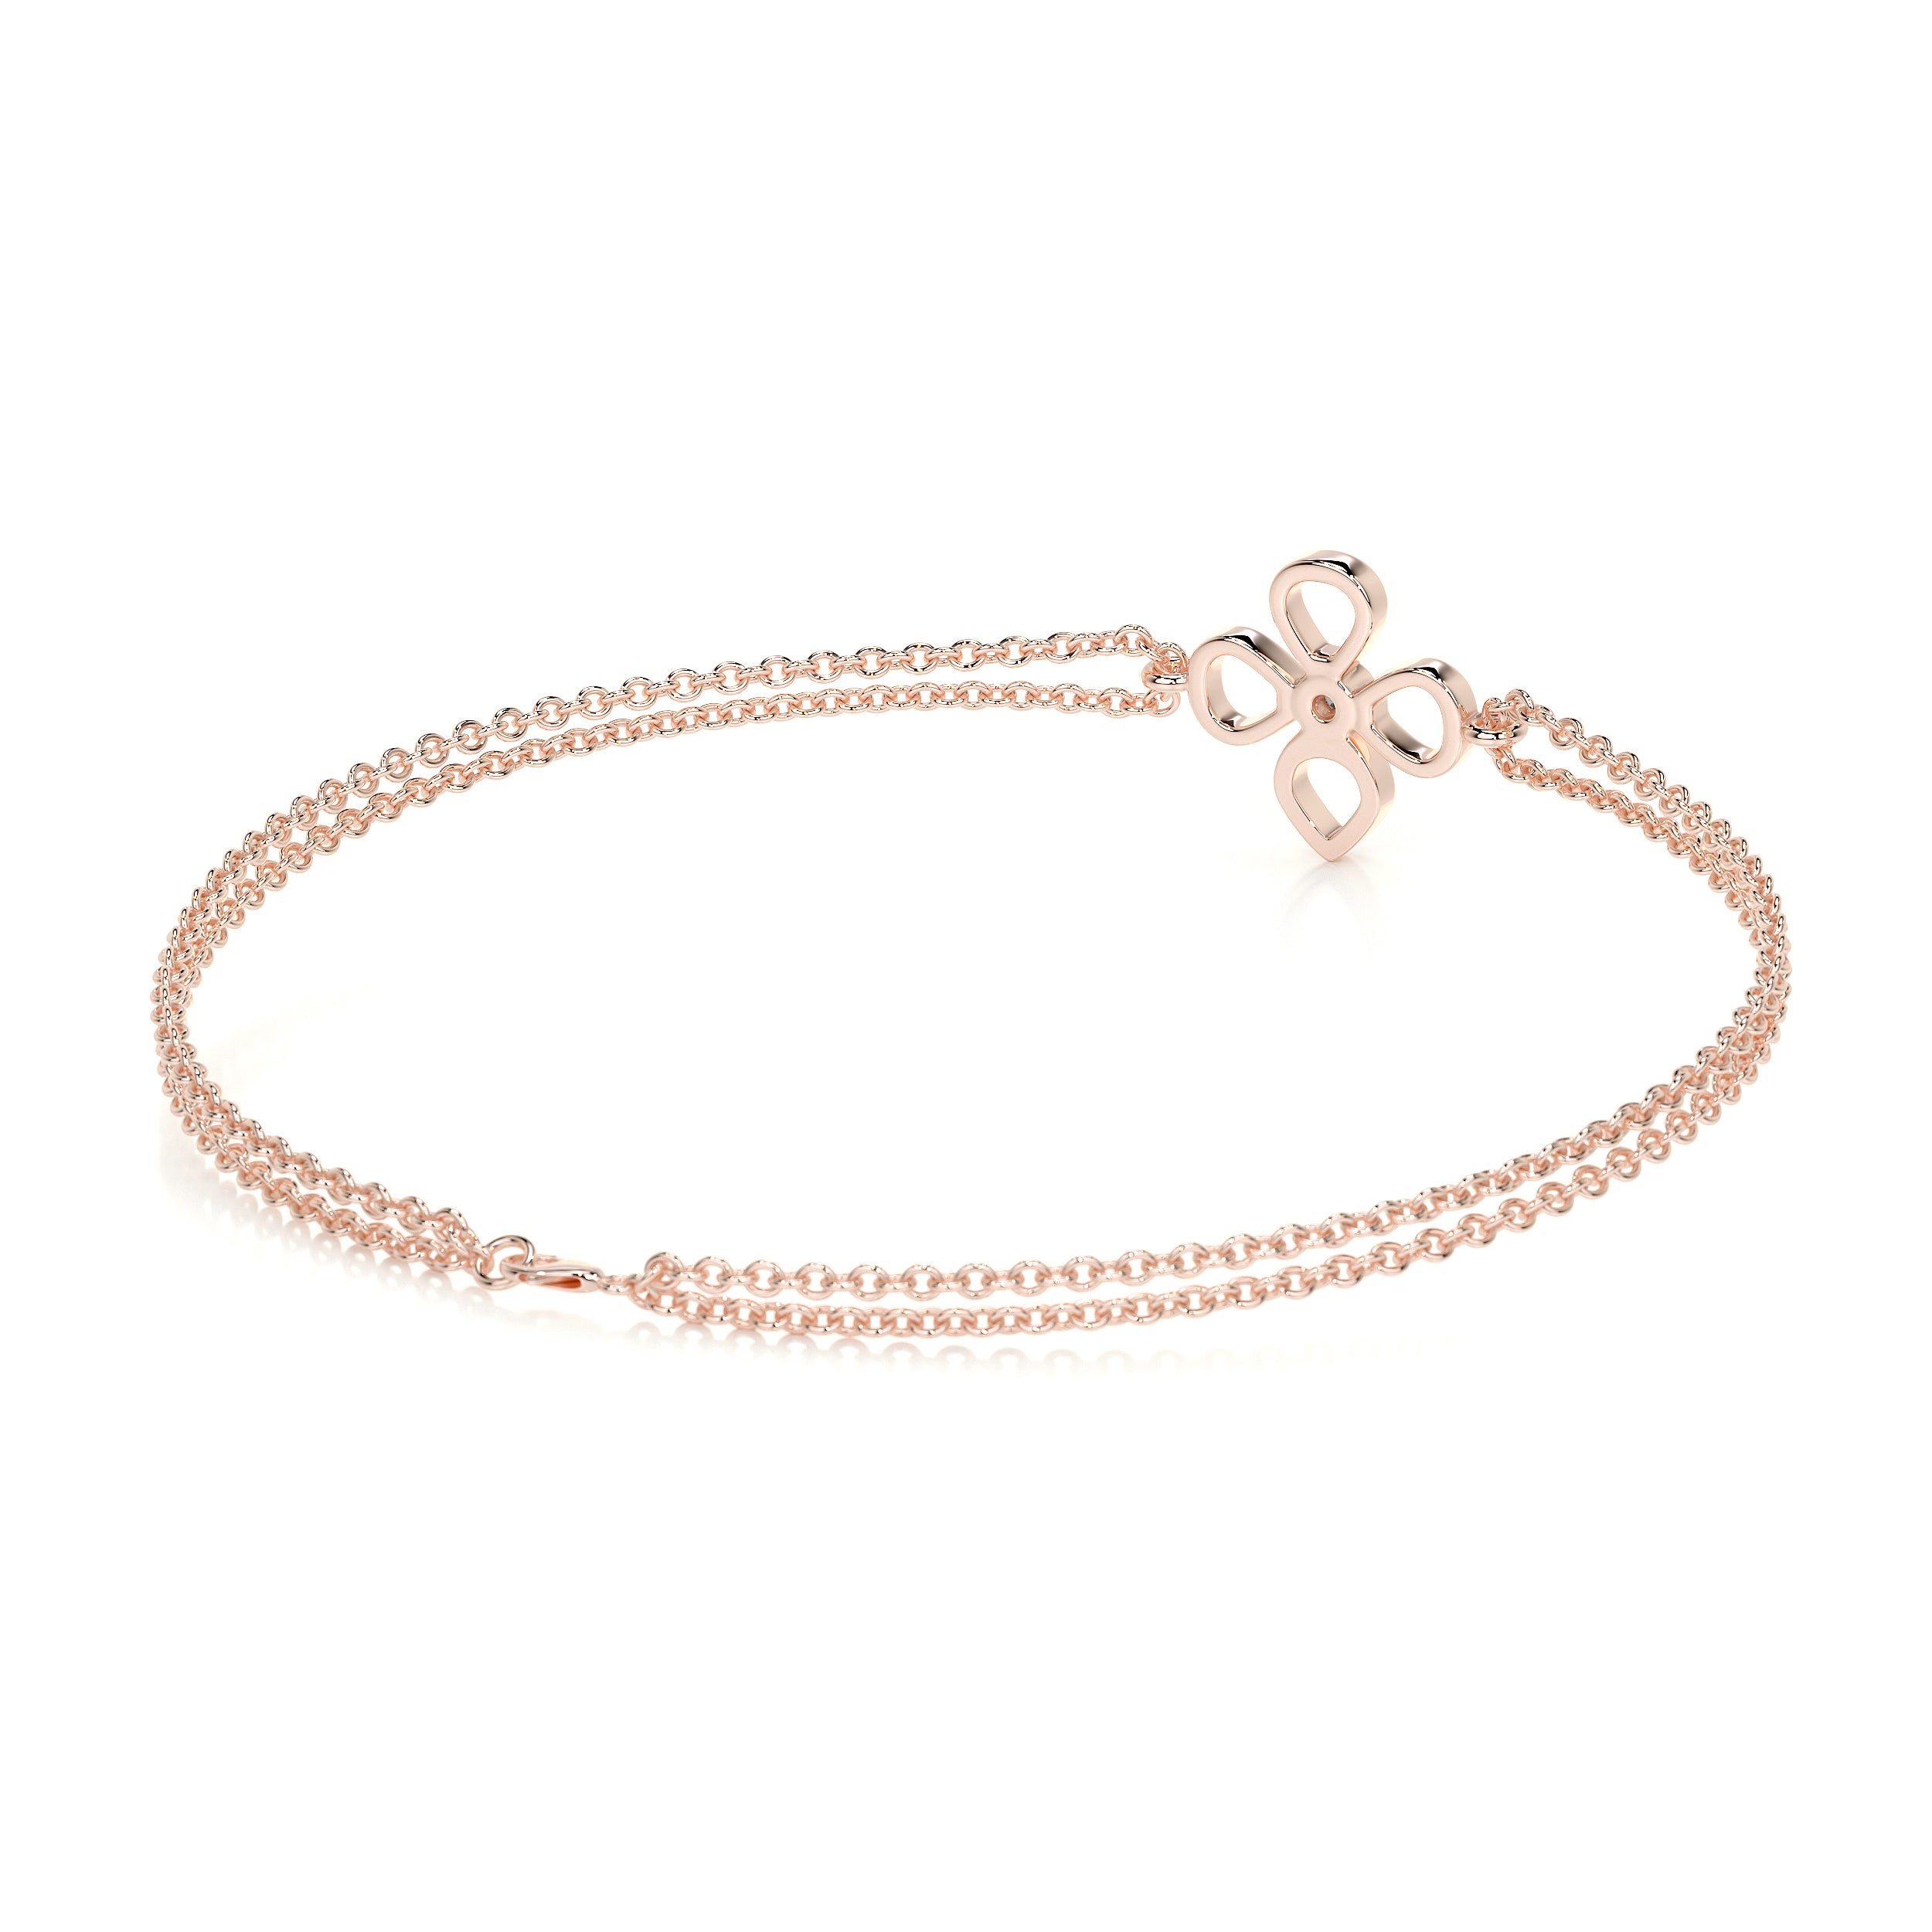 Dolores Diamonds Bracelet   (0.02 Carat) -14K Rose Gold